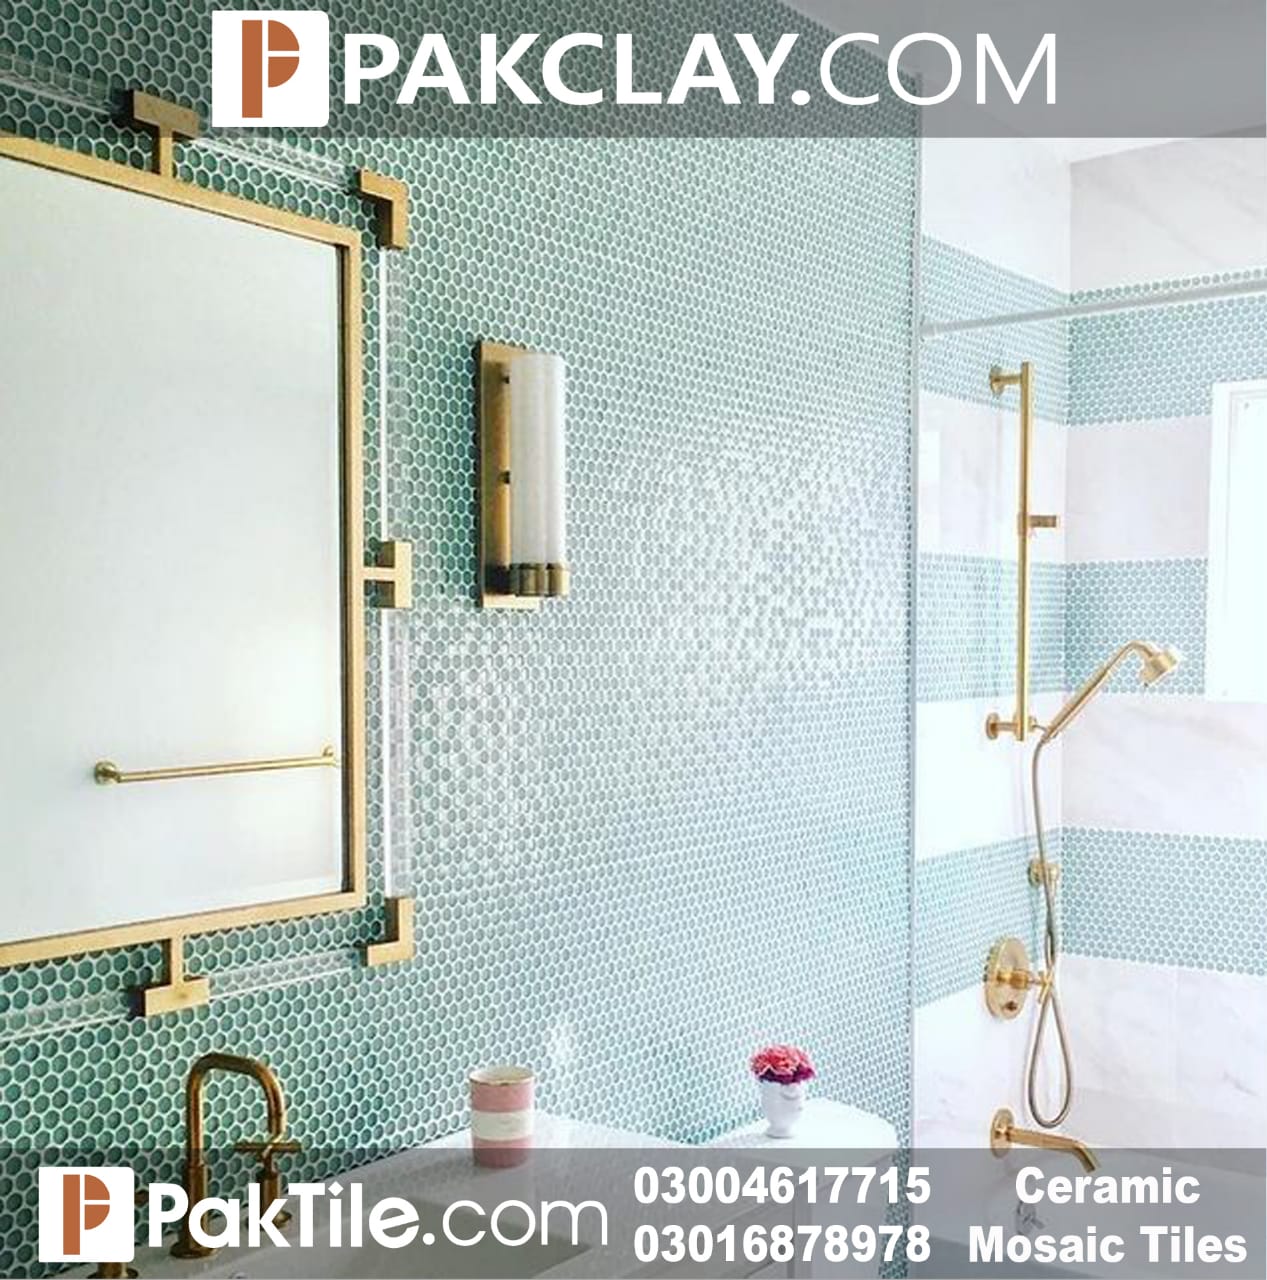 Pak Clay Hexagon Mosaic Wall Tiles